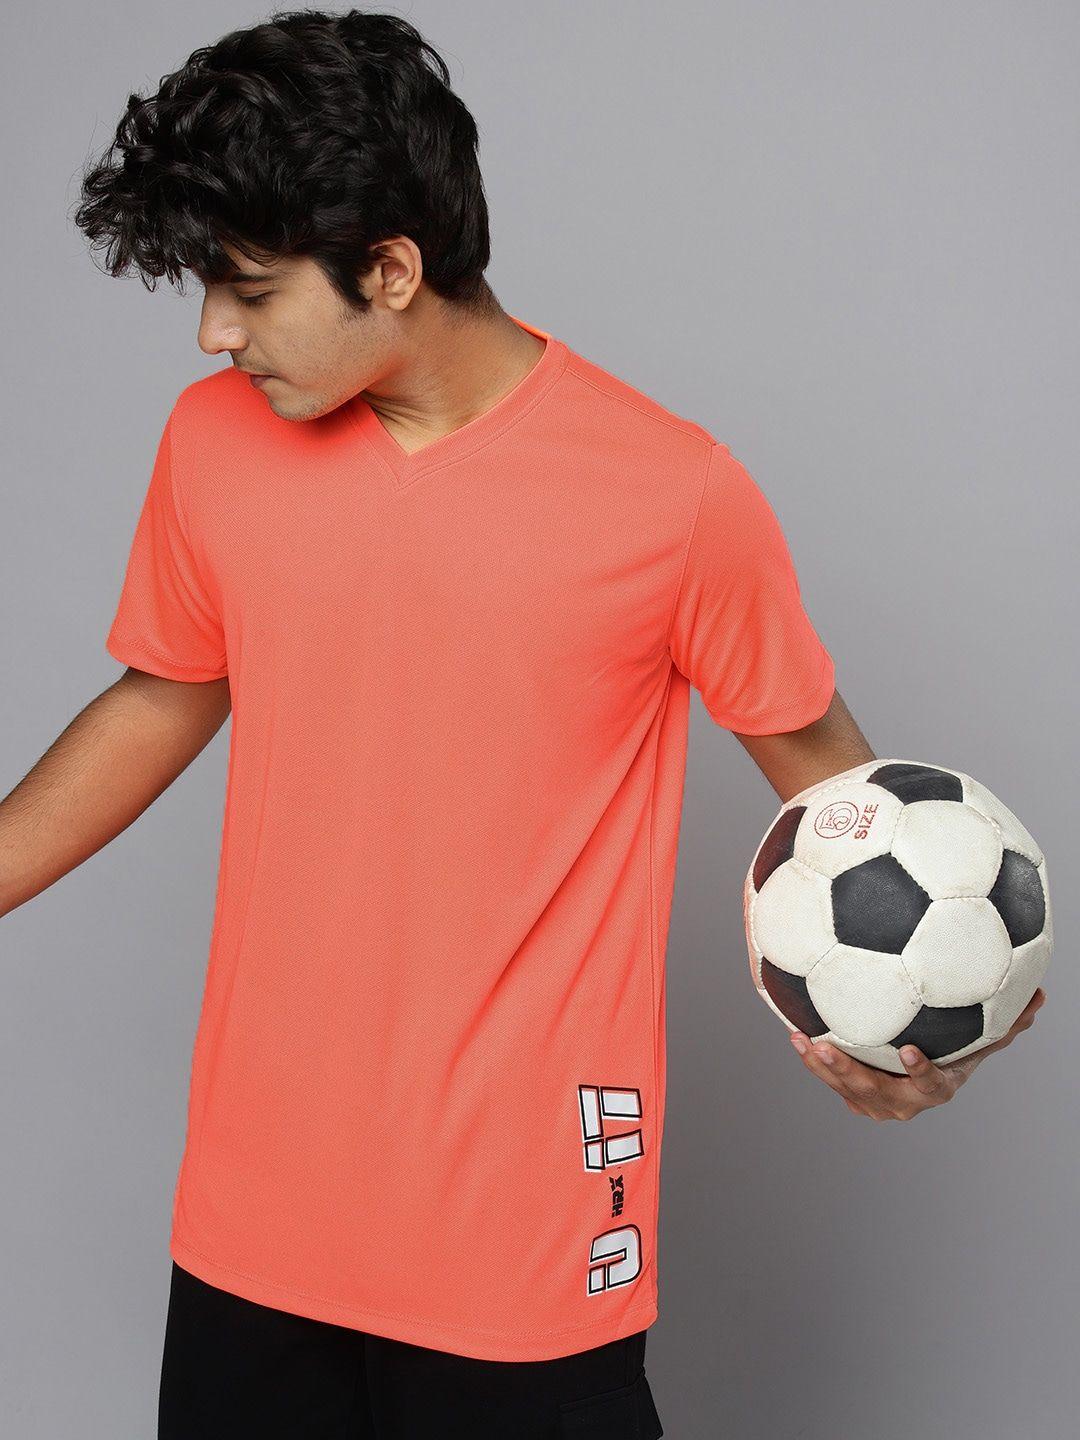 hrx by hrithik roshan u-17 boys neon orange rapid-dry solid tshirts